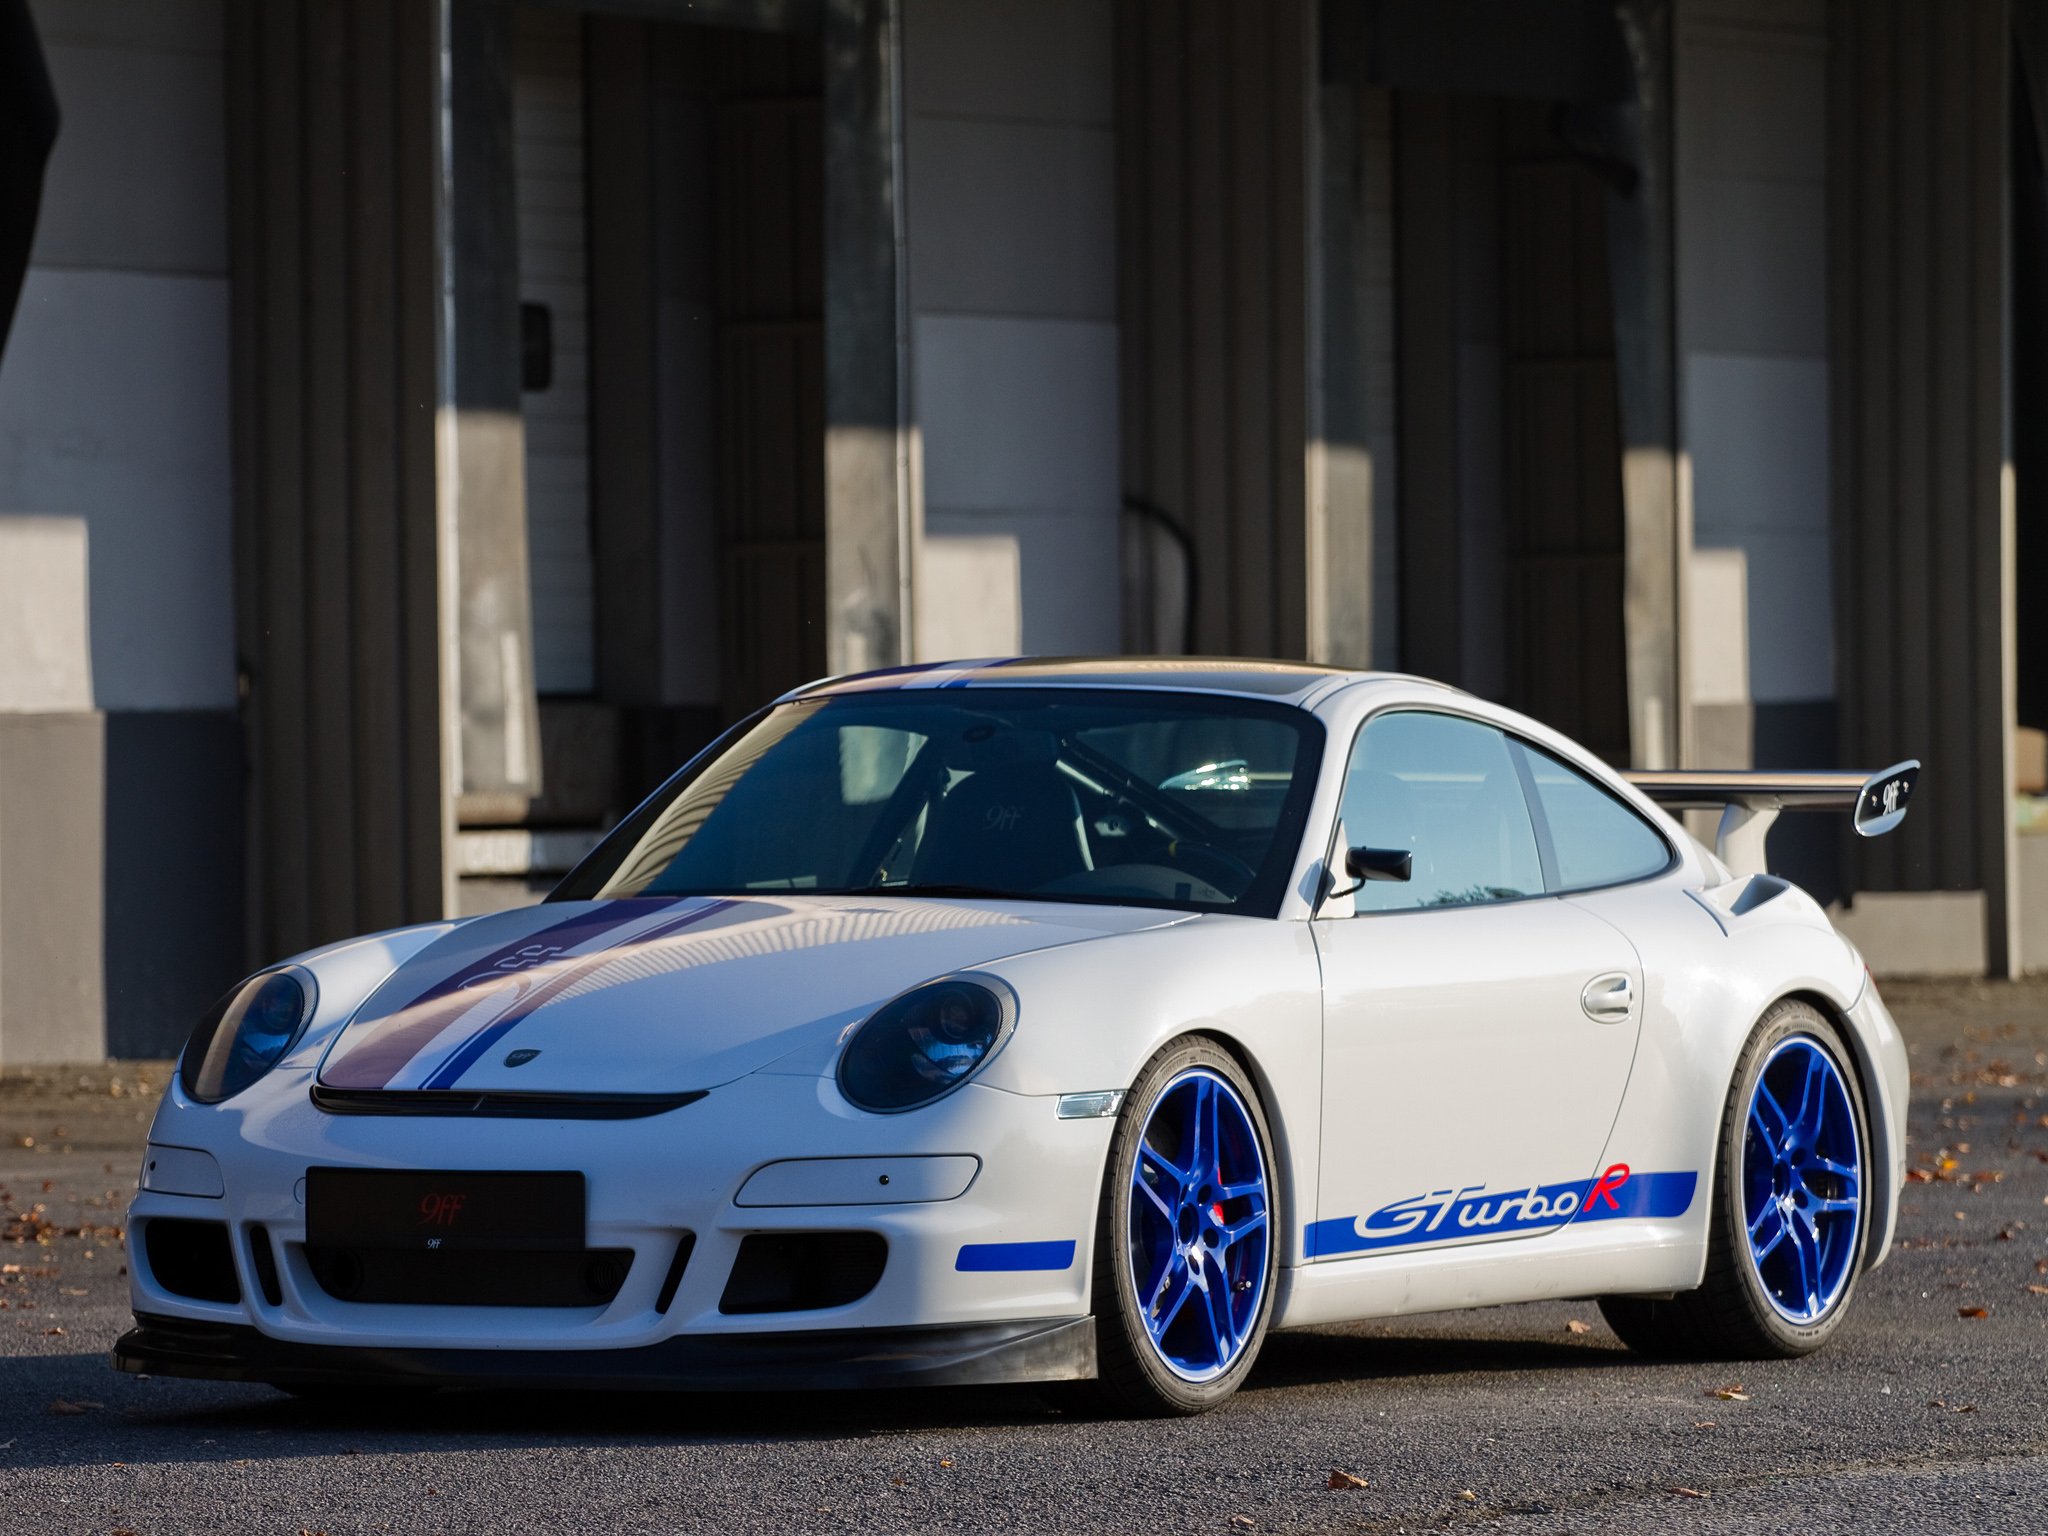 9ff, Porsche, 911, Gt turbo r, Coupe, 997 , Modified, Cars, 2011